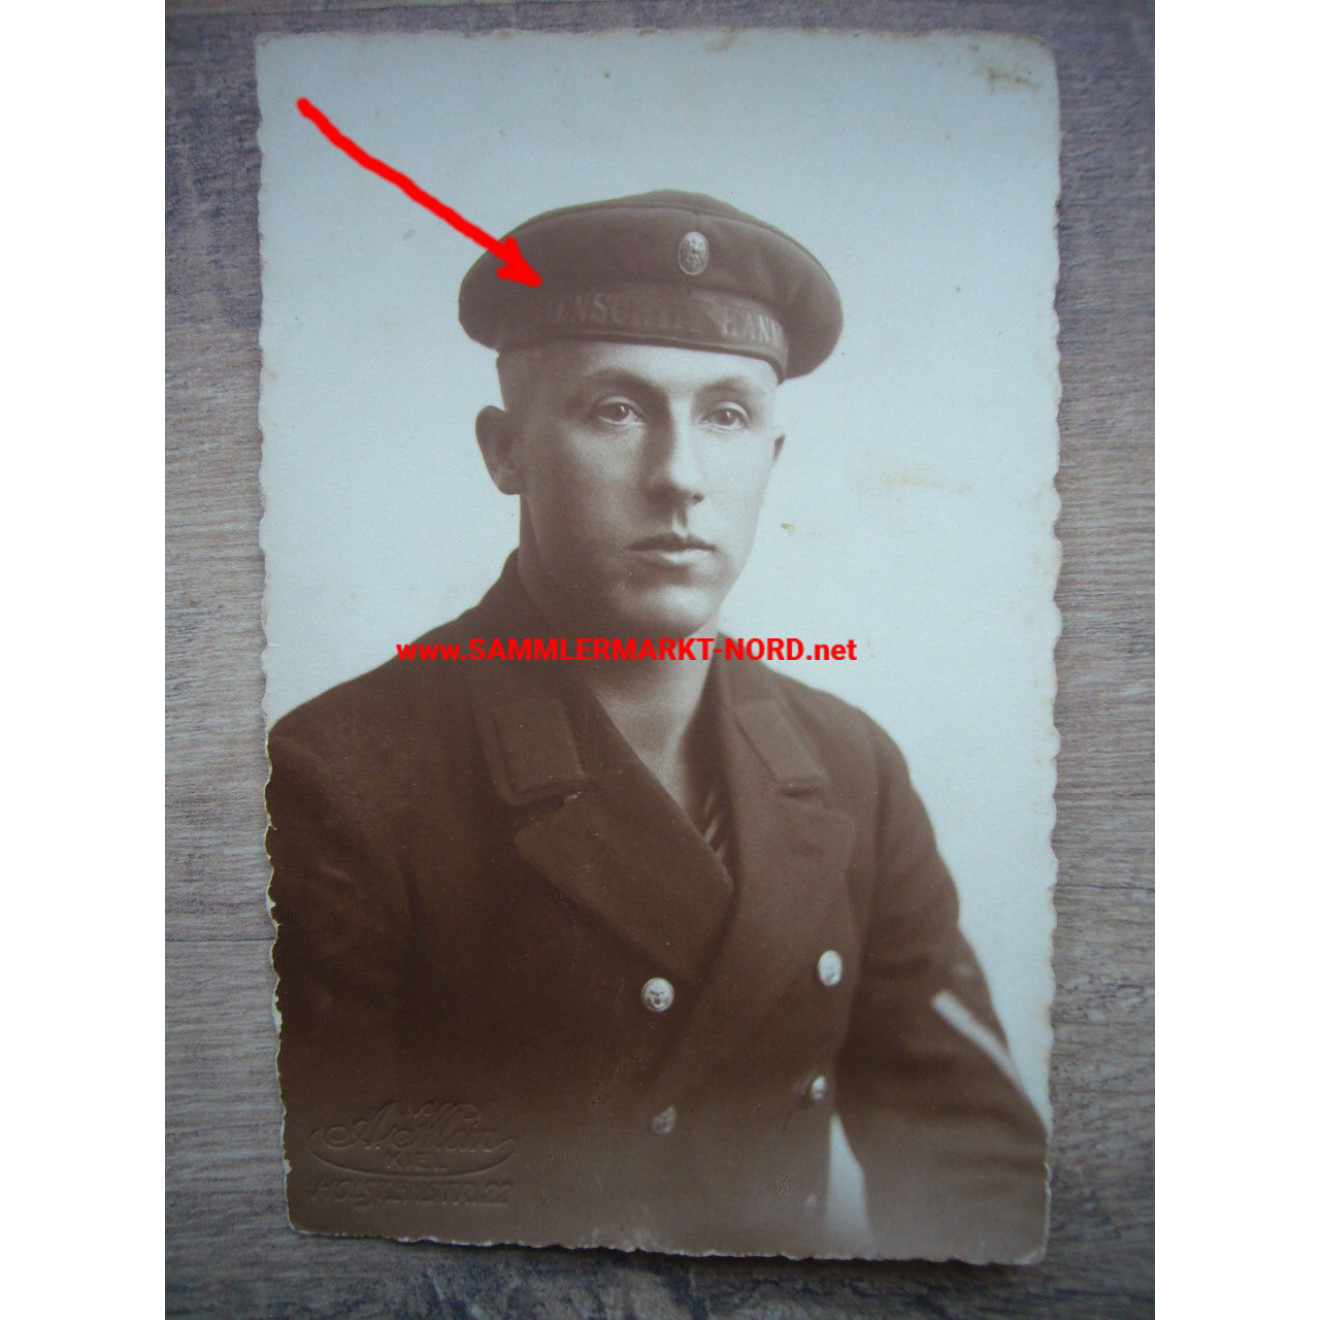 Reichsmarine - sailor with cap title "Linienschiff Hannover"